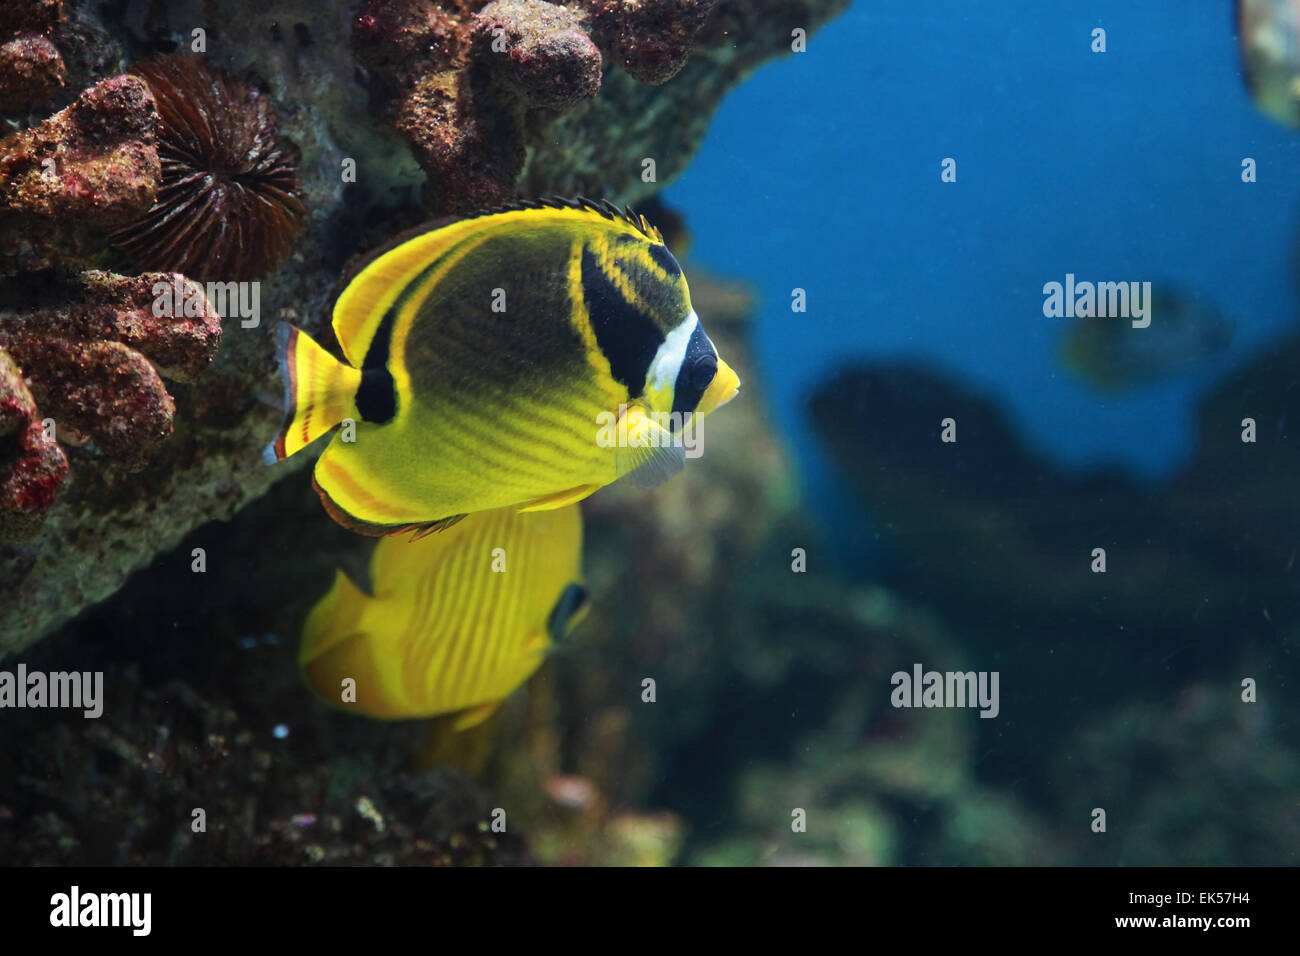 Tropical yellow and black aquarium fish, closeup photo with shallow DOF Stock Photo